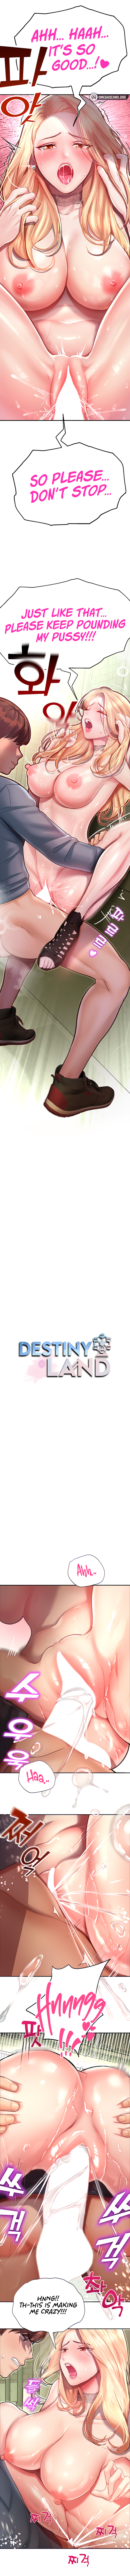 Destiny Land NEW image